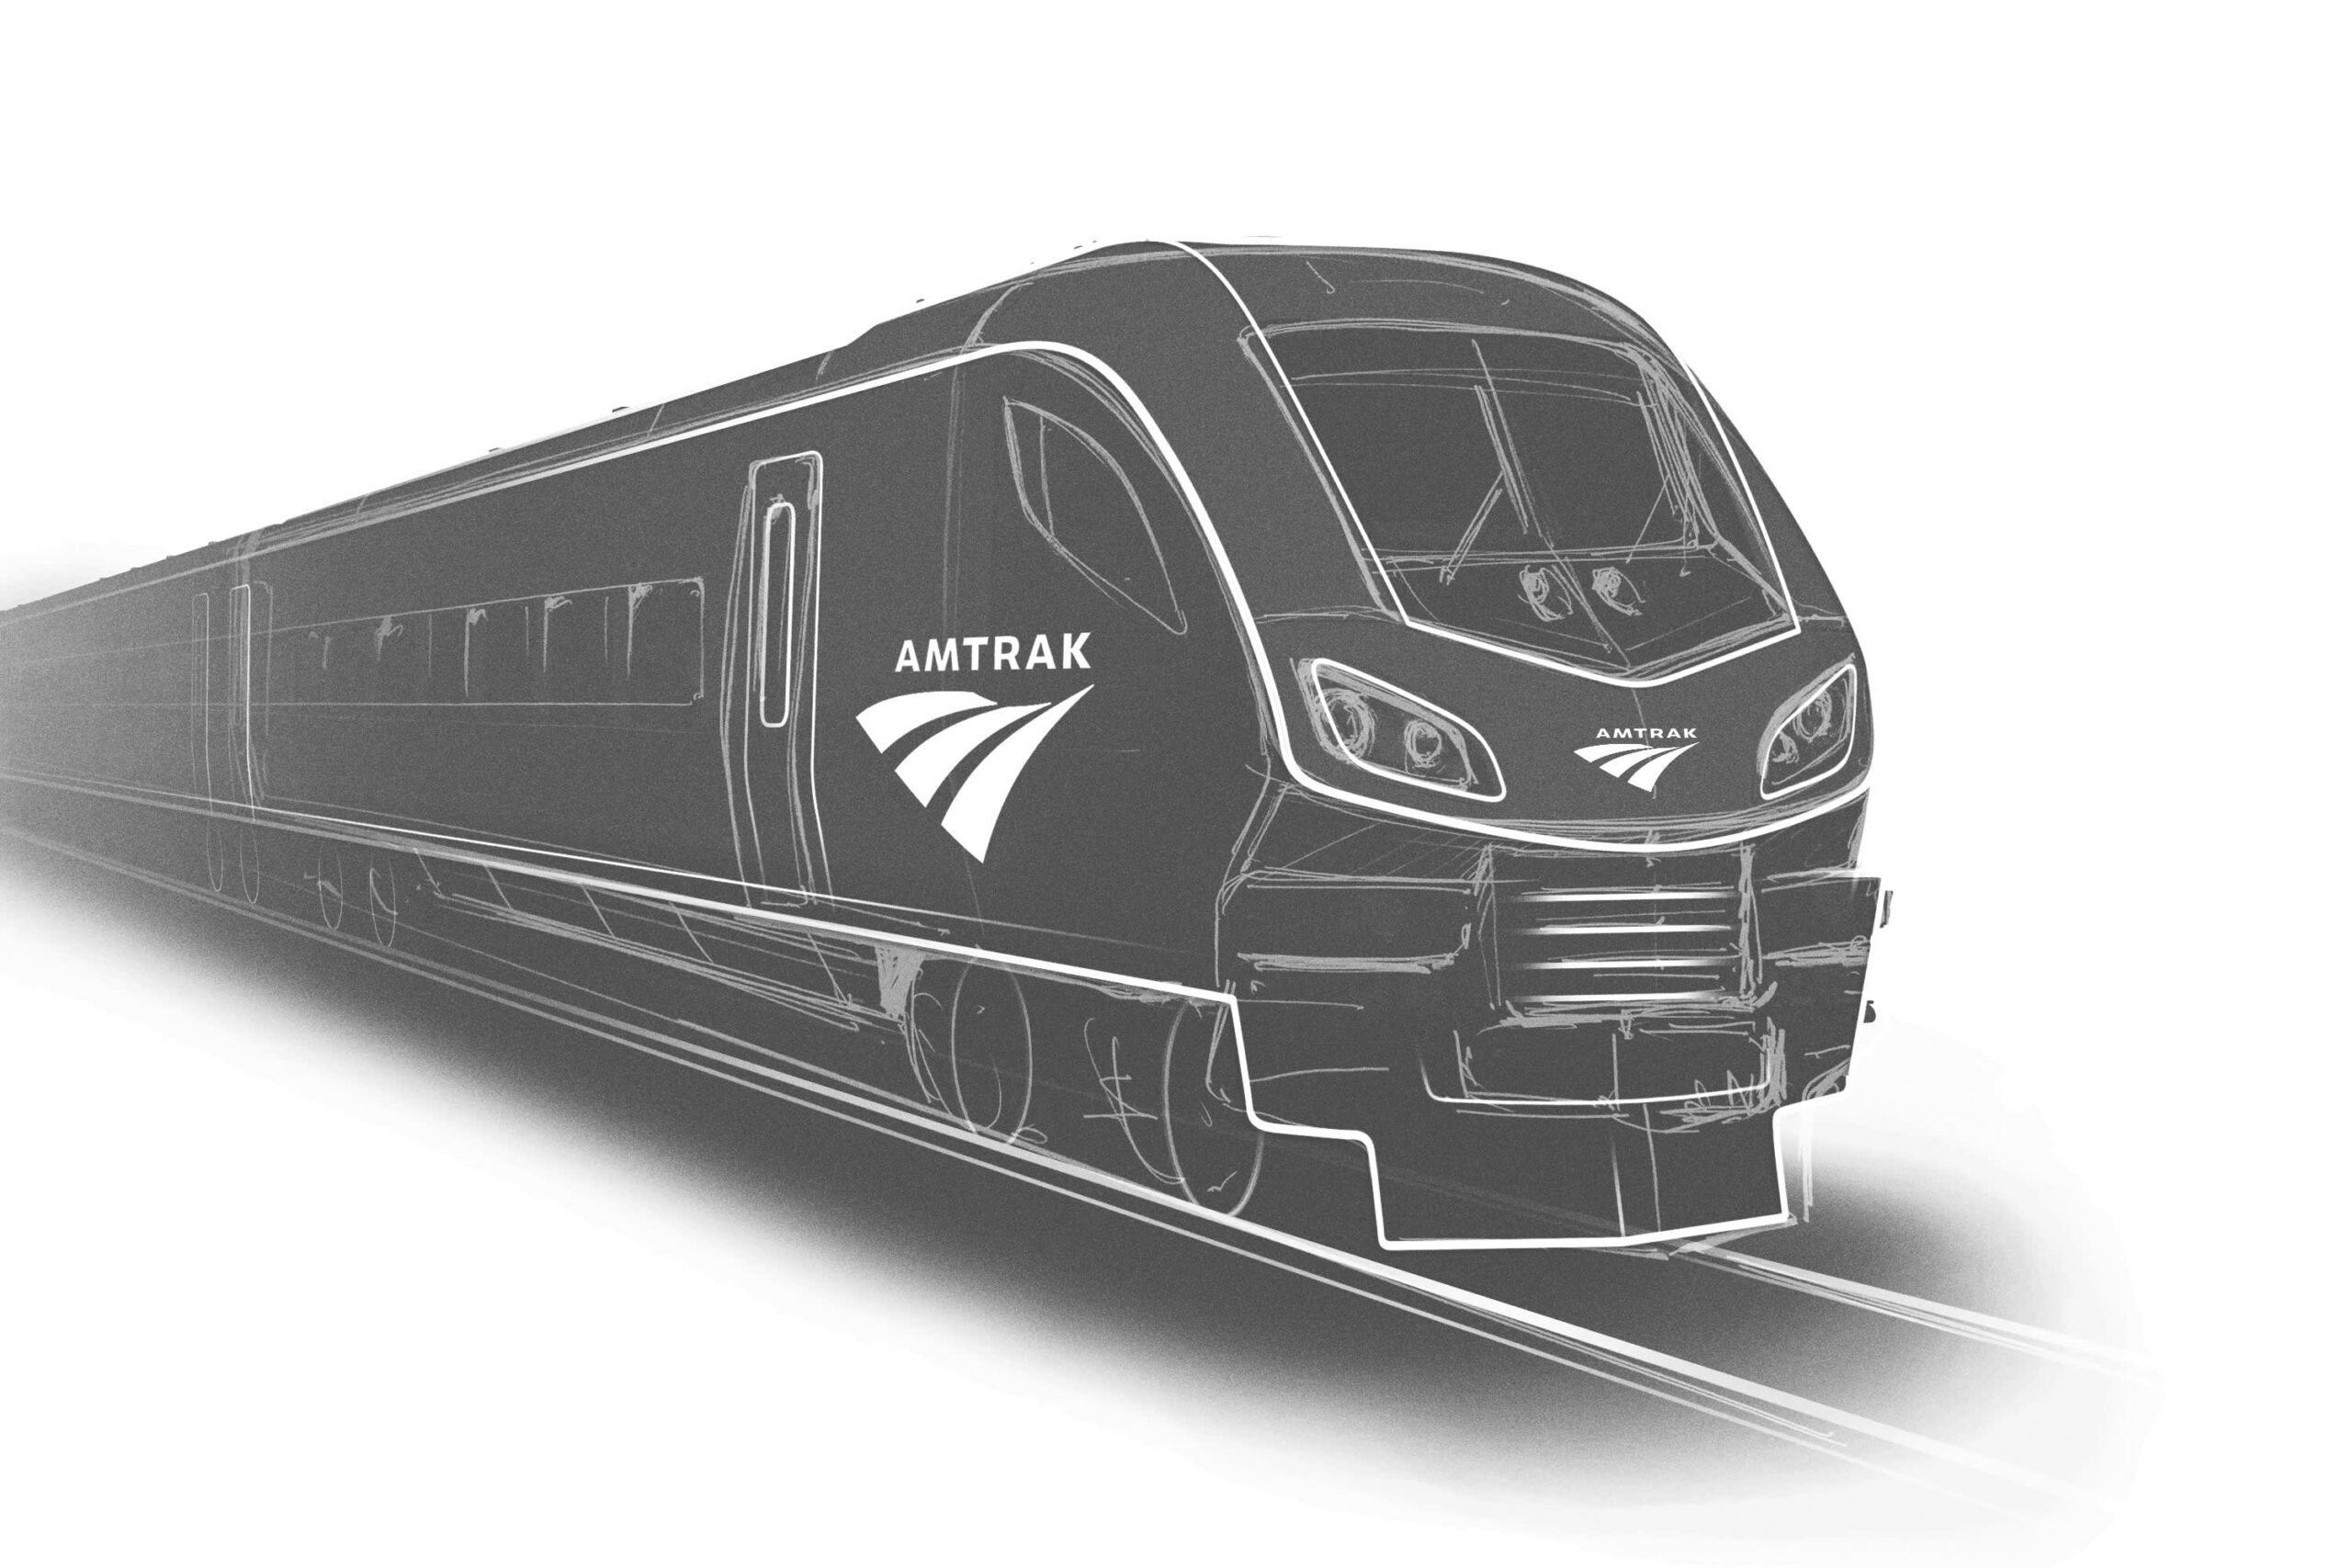 Amtrak invests $7.three billion in new fleet of recent trains to service Northeast